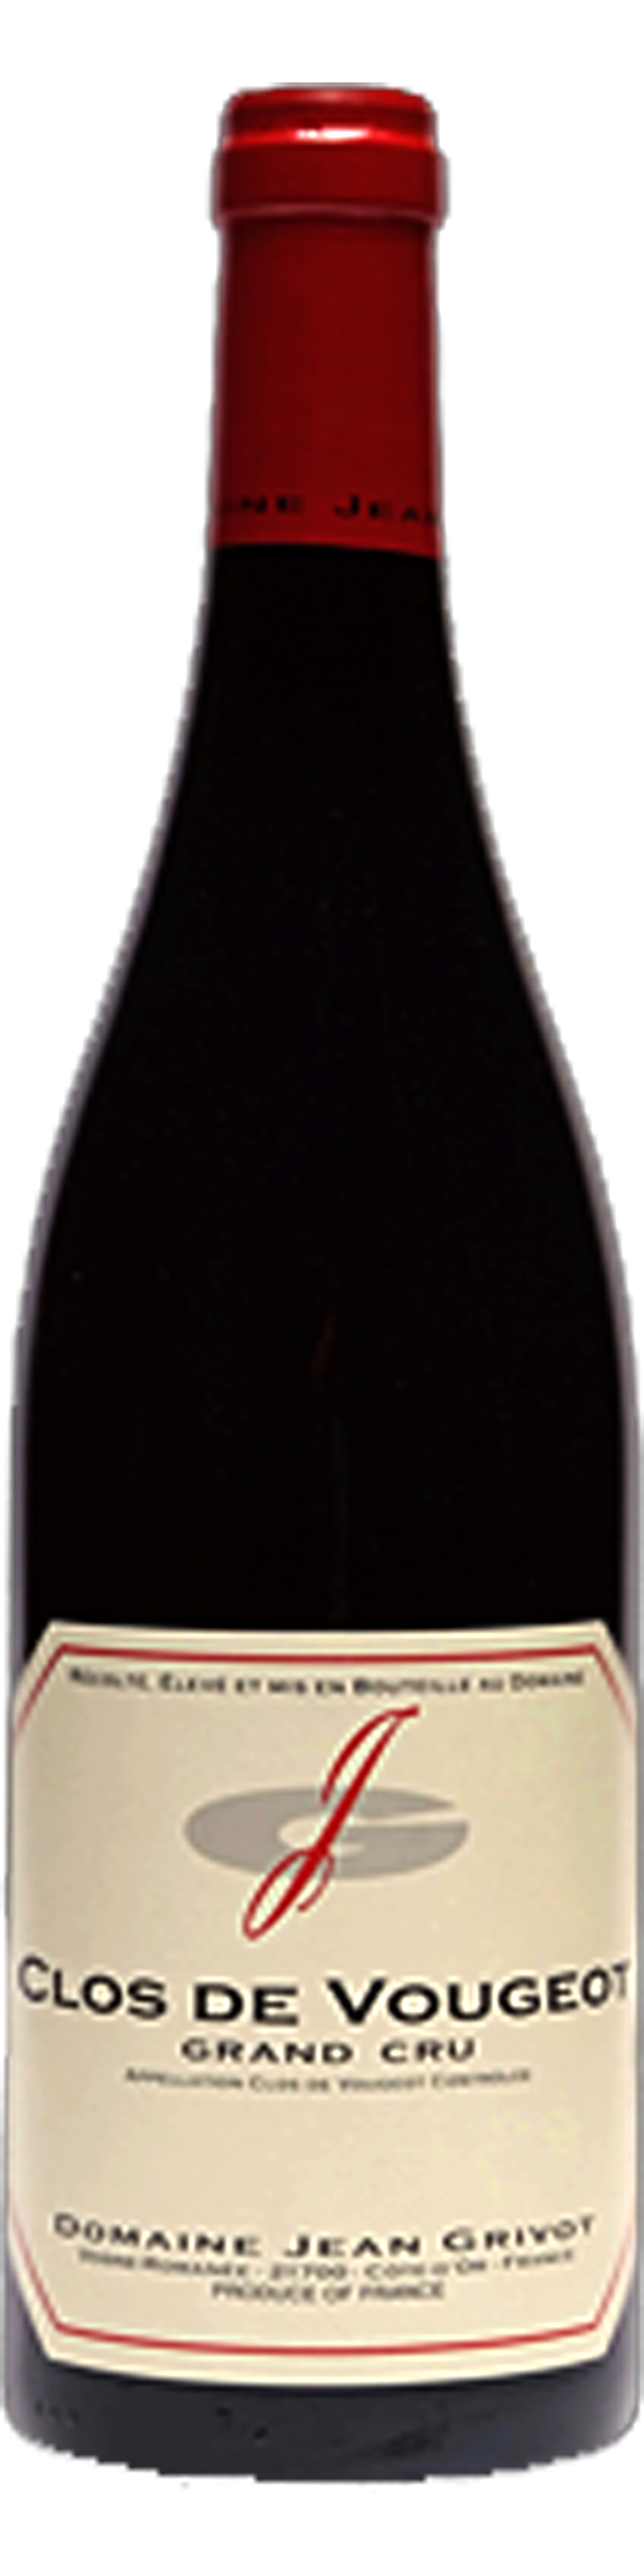 Bottle shot of 1997 Clos de Vougeot Grand Cru